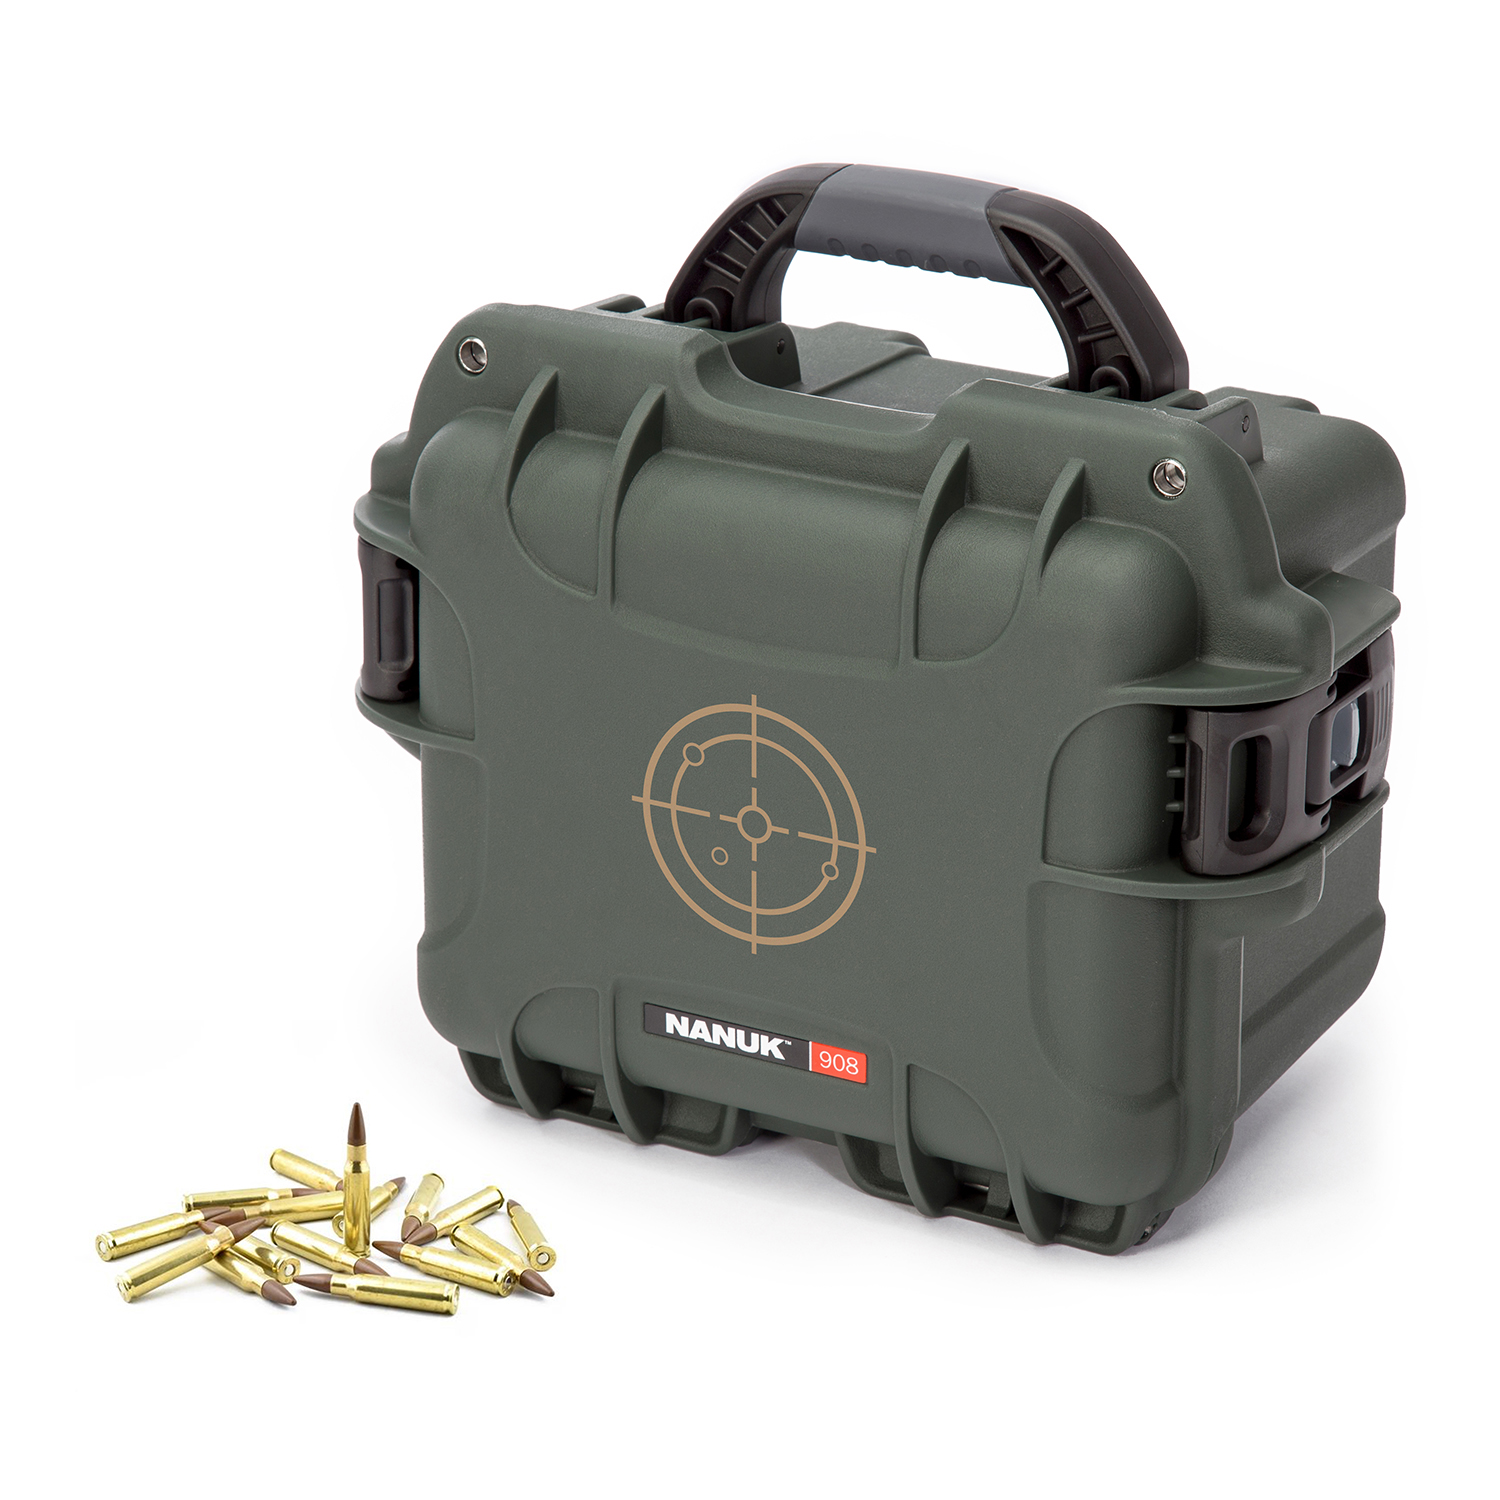 Nanuk 908 Waterproof Ammo Case - Olive